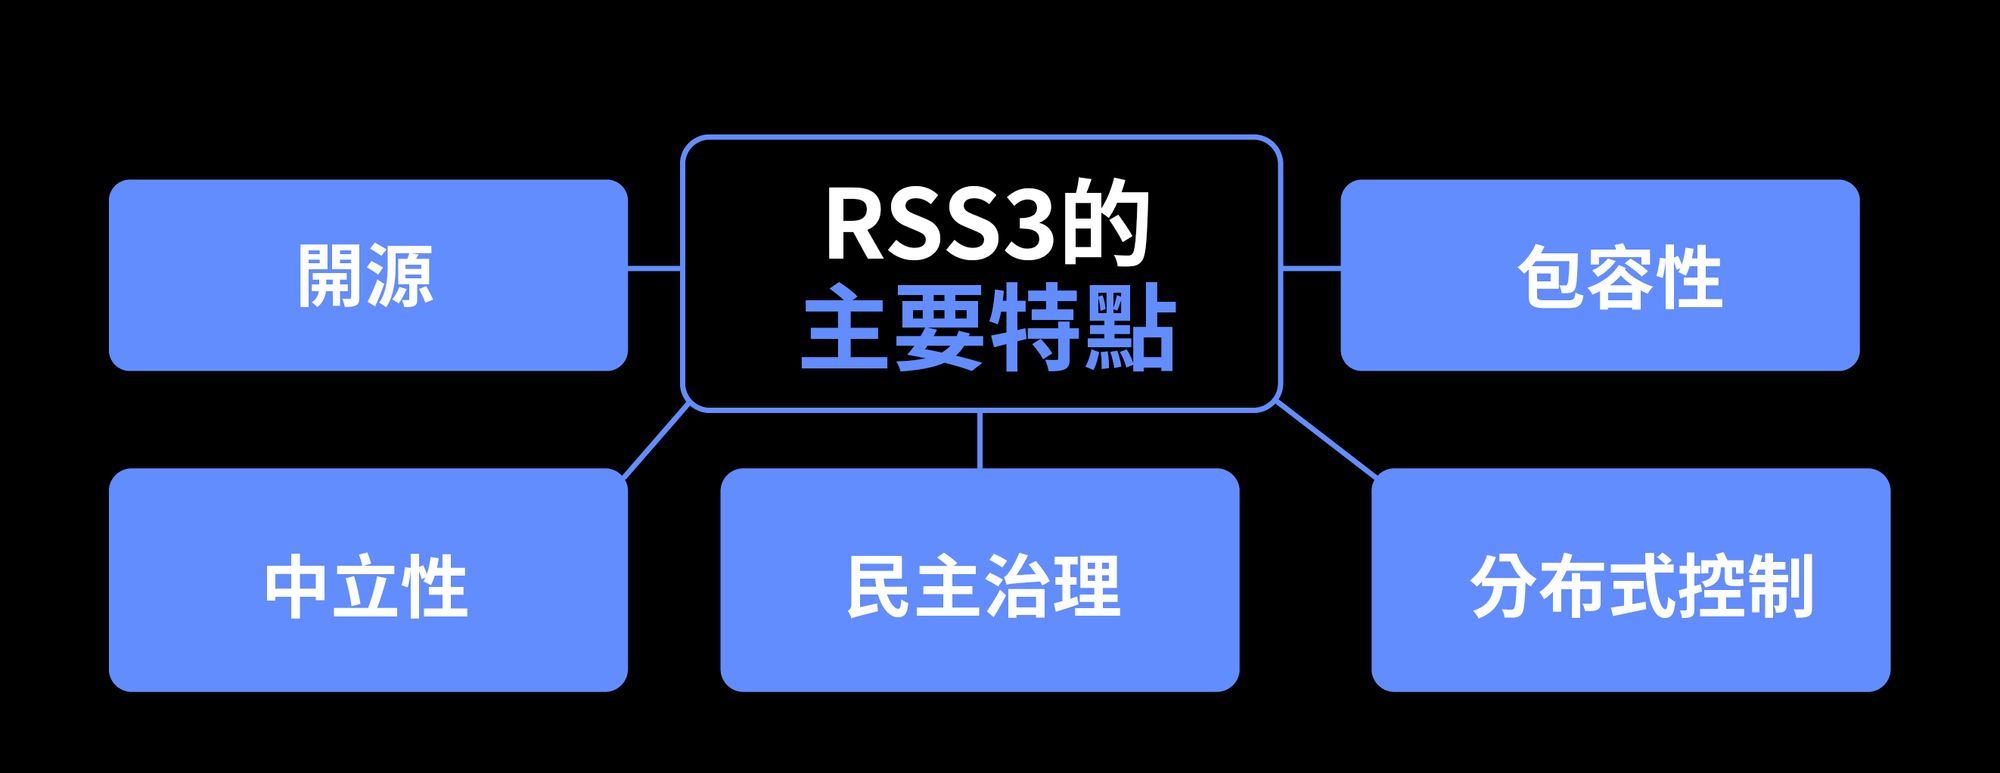 RSS3的主要特點